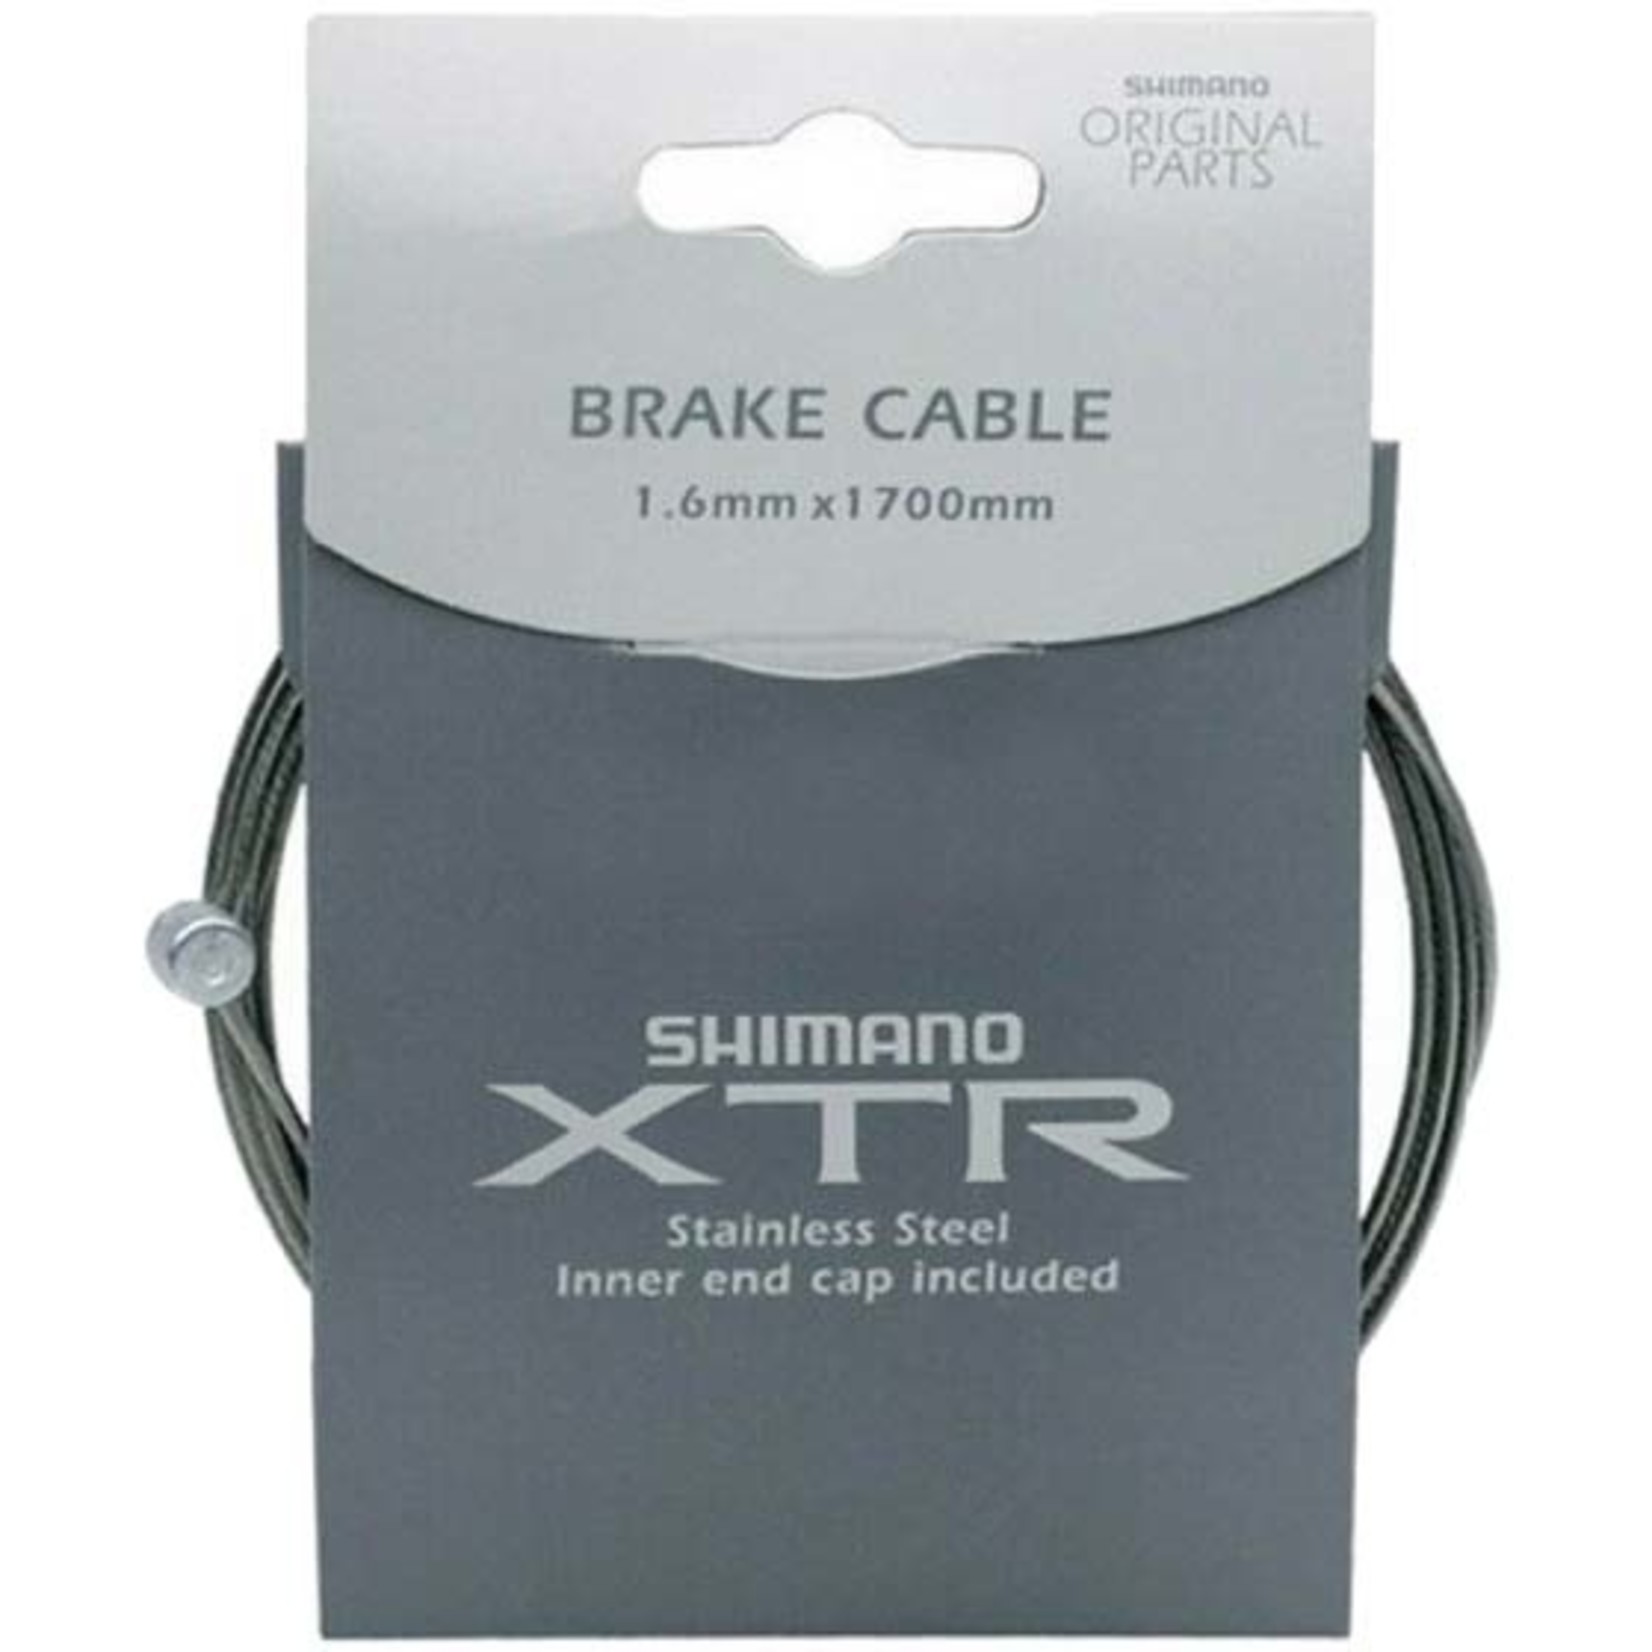 SHIMANO Shimano XTR Brake Cable 1.6x1700mm